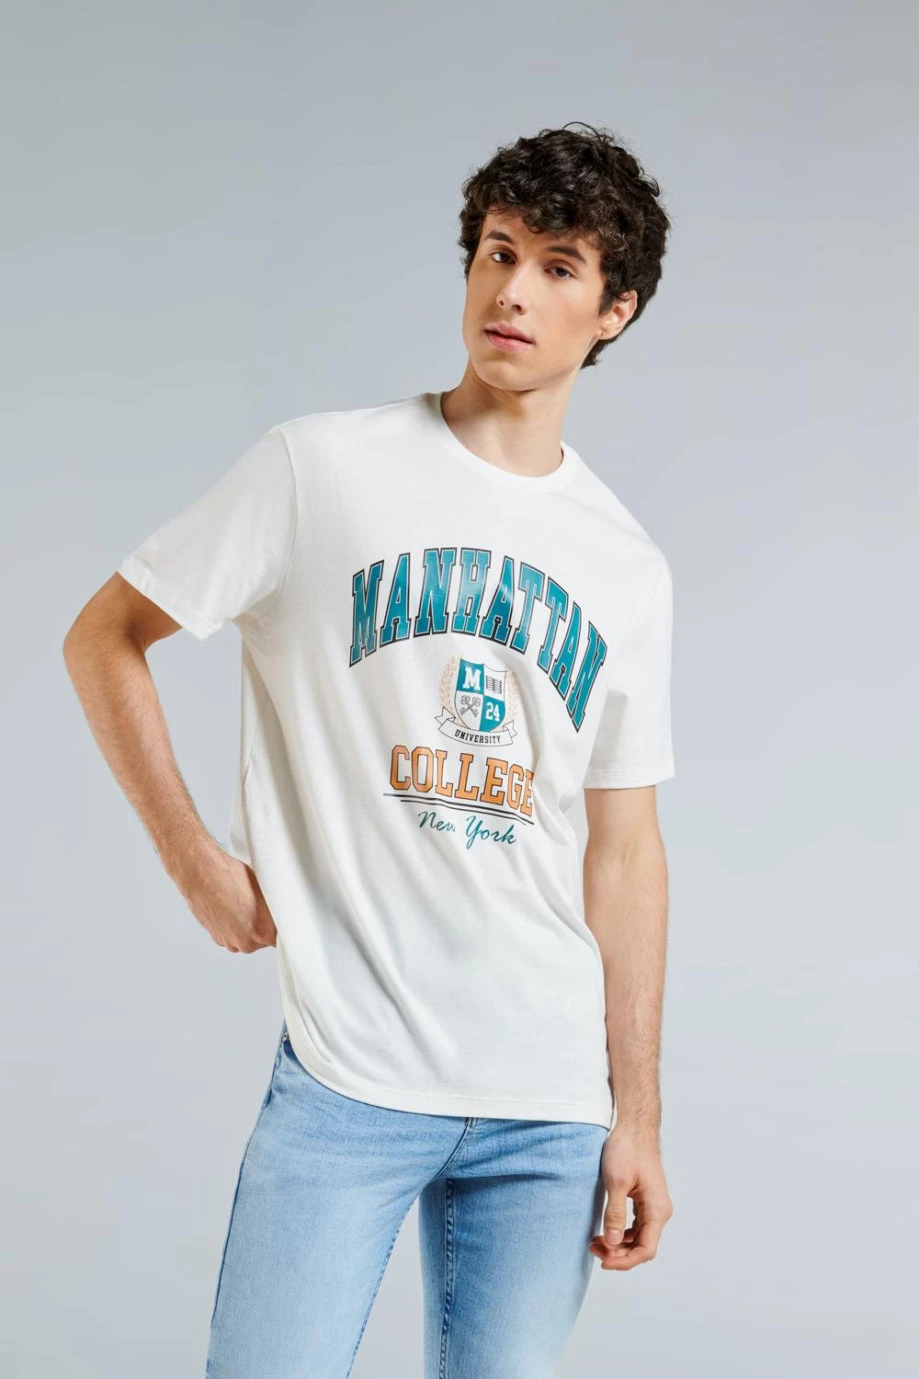 Camiseta manga corta unicolor con texto college de Manhattan en frente